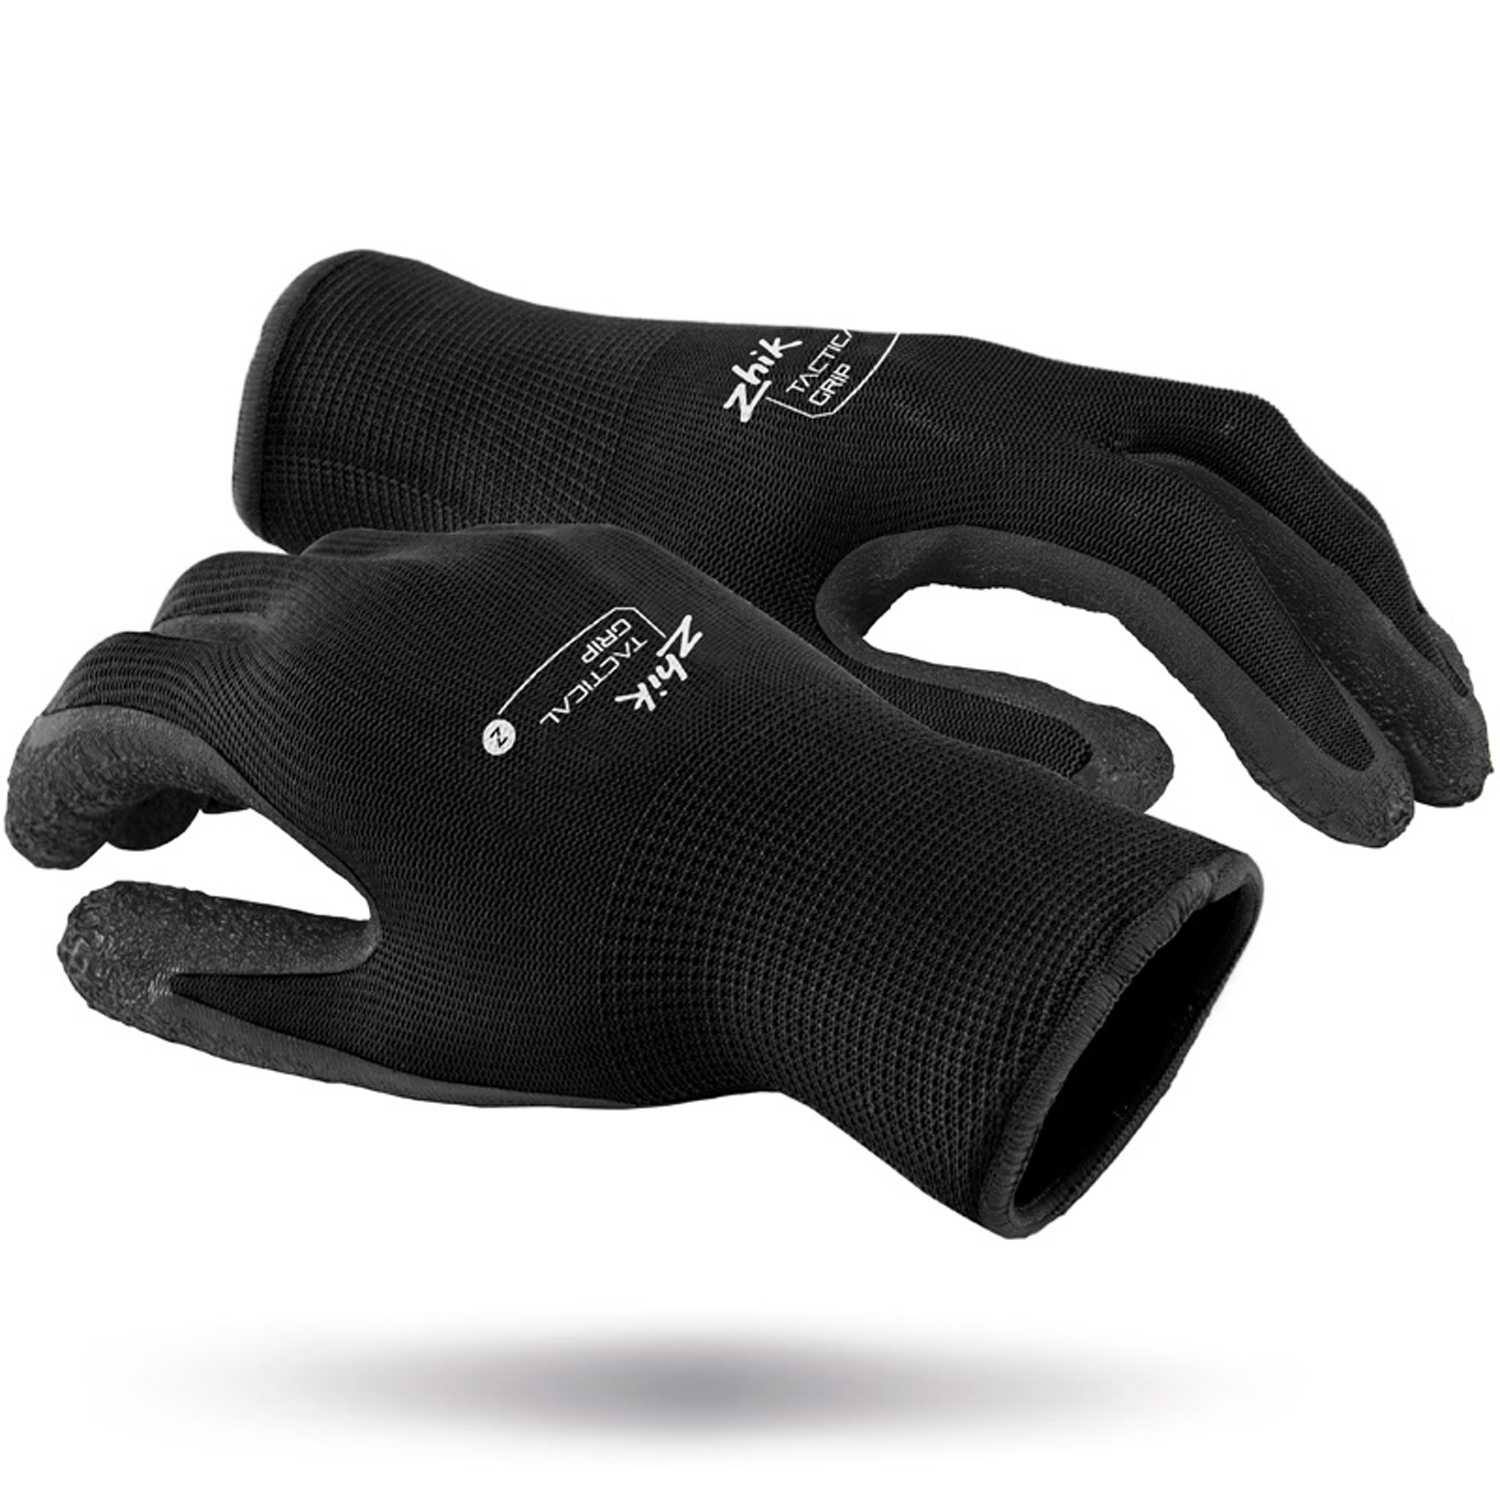 2023 Zhik Grippy Sailing Gloves 3 Pack - Black - GLV-0006